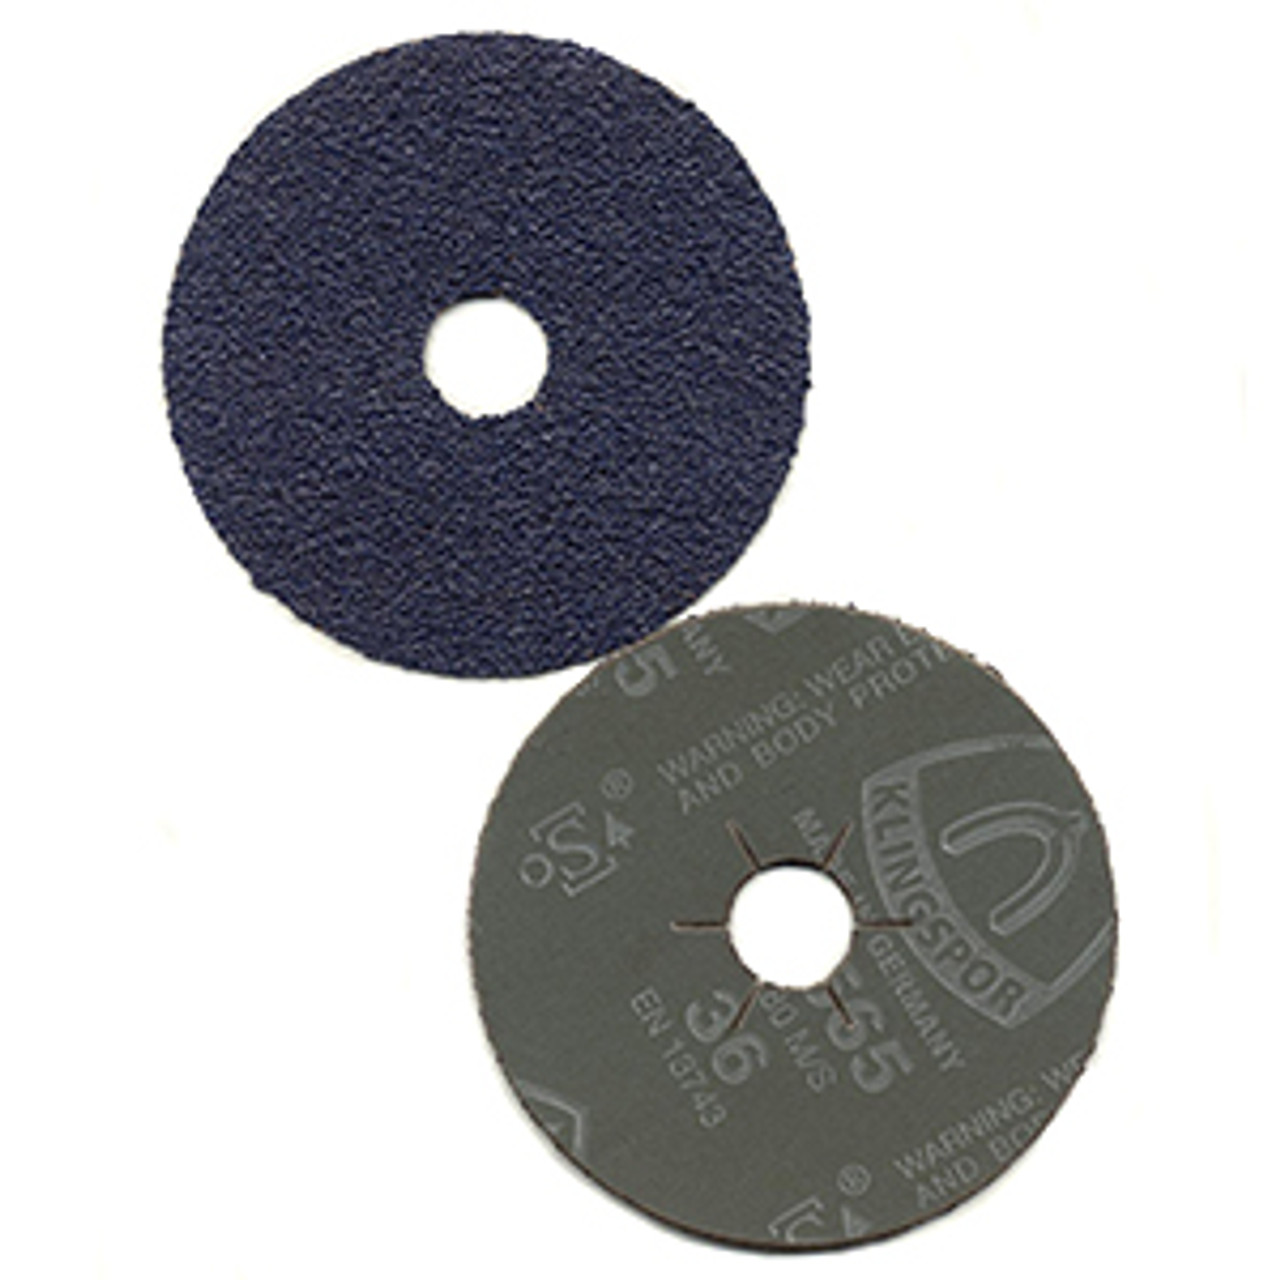 Klingspor Abrasives Alumina Zirconia CS565 Fibre Discs, 50 Grit, 7"x 7/8" Center Hole, 5pk